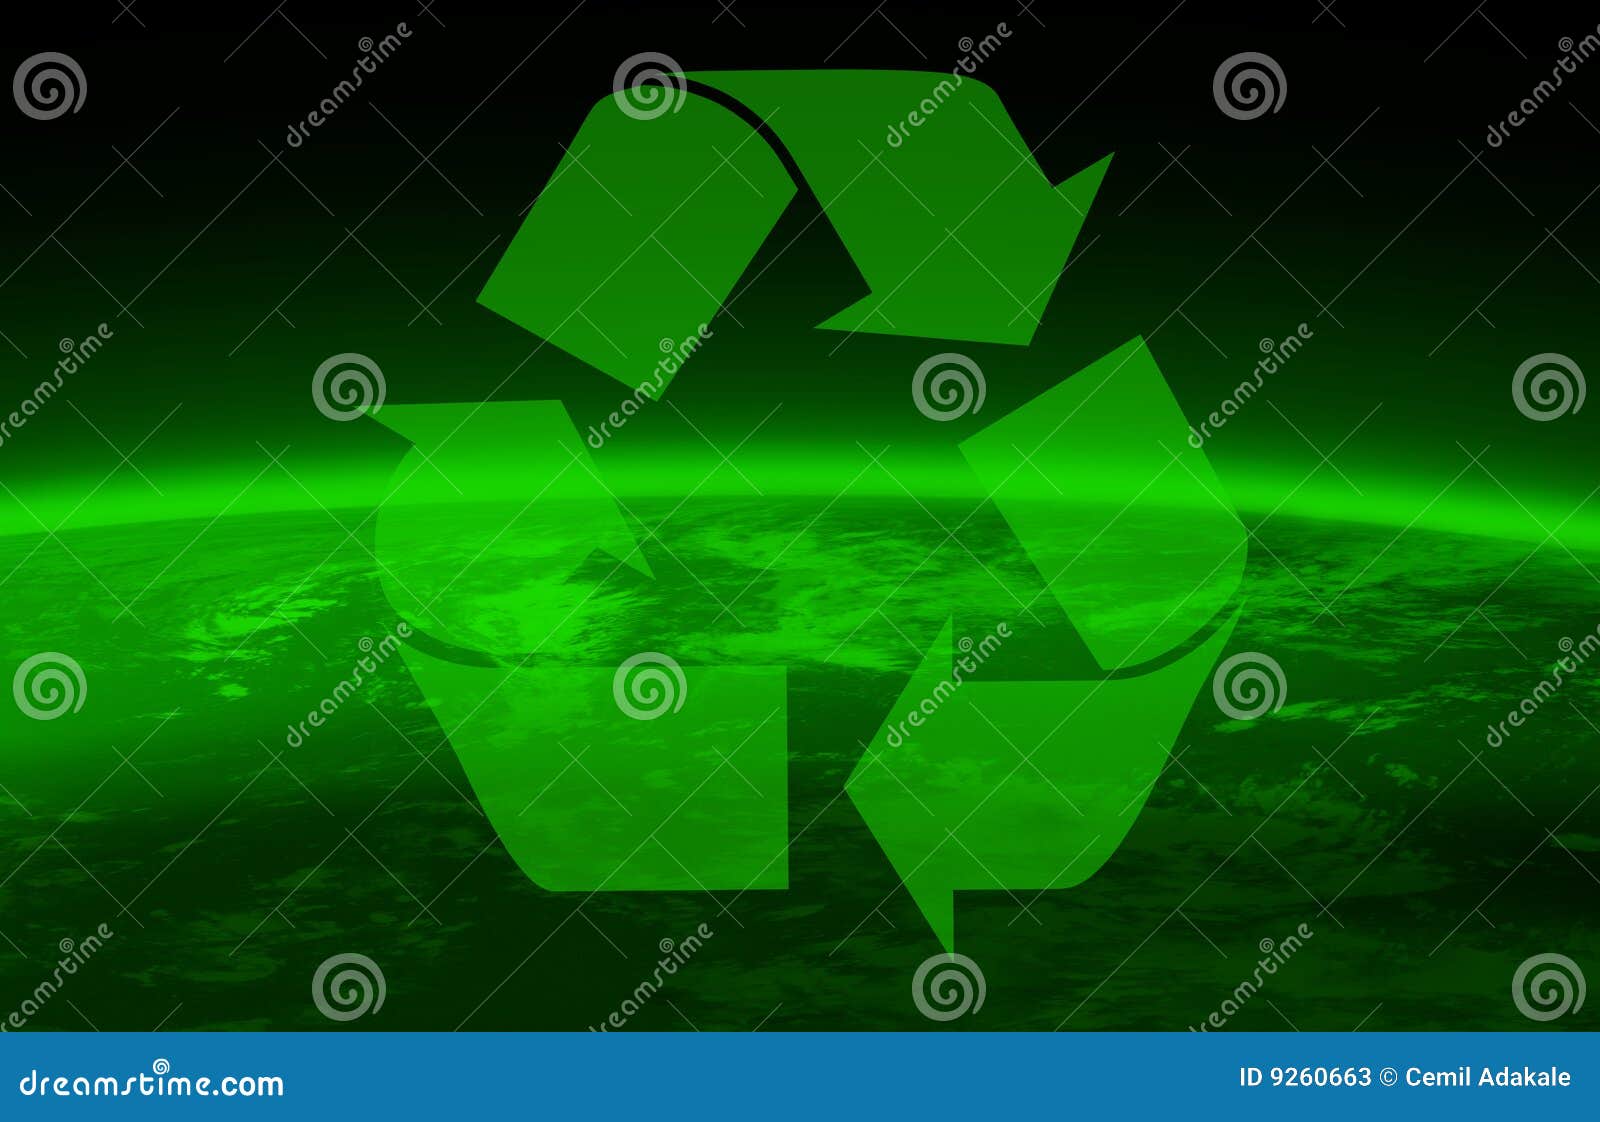 greenpeace and world globe